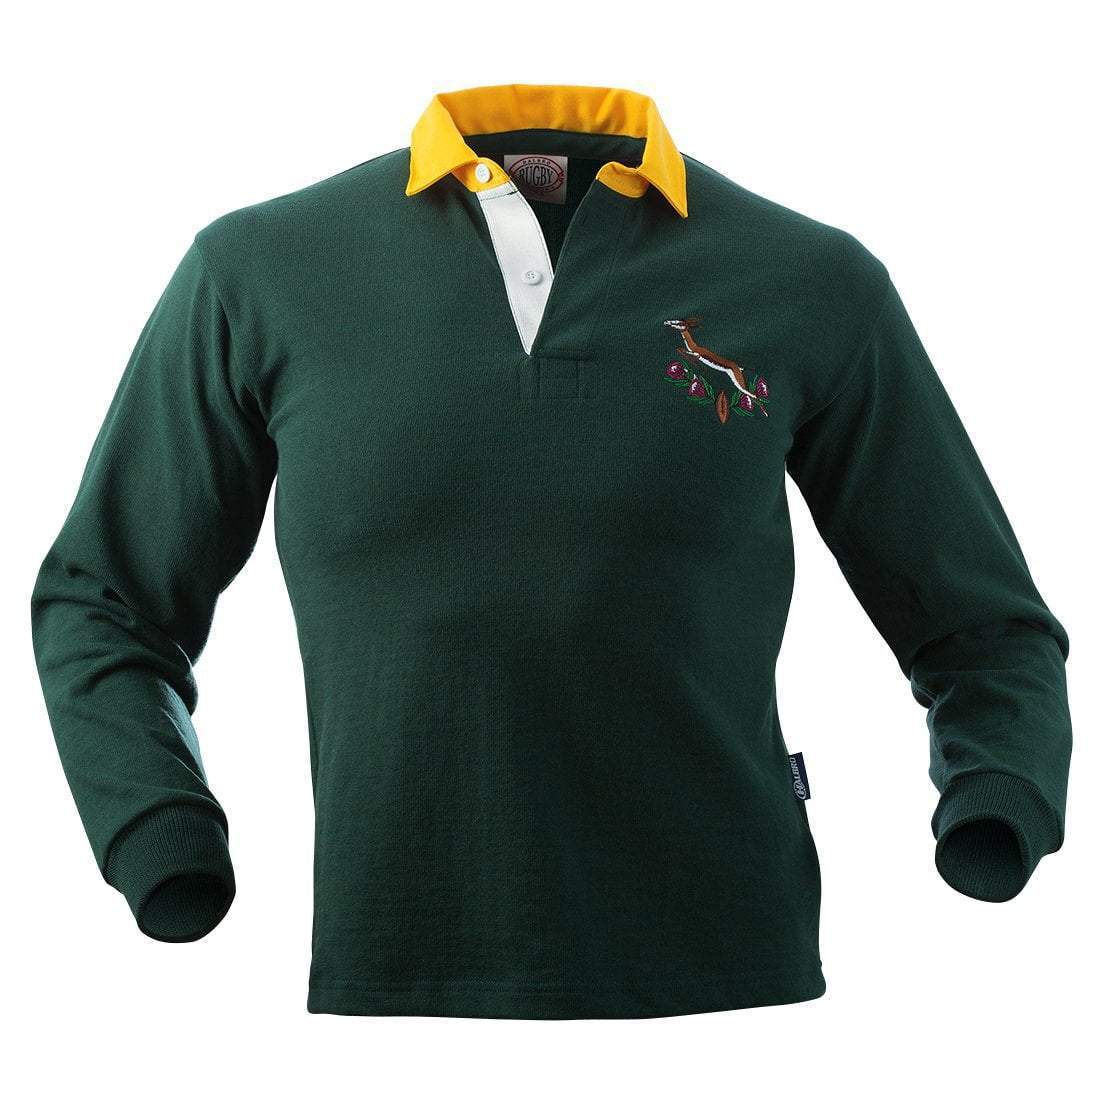 Old School Rugby Jerseys – Old School SA